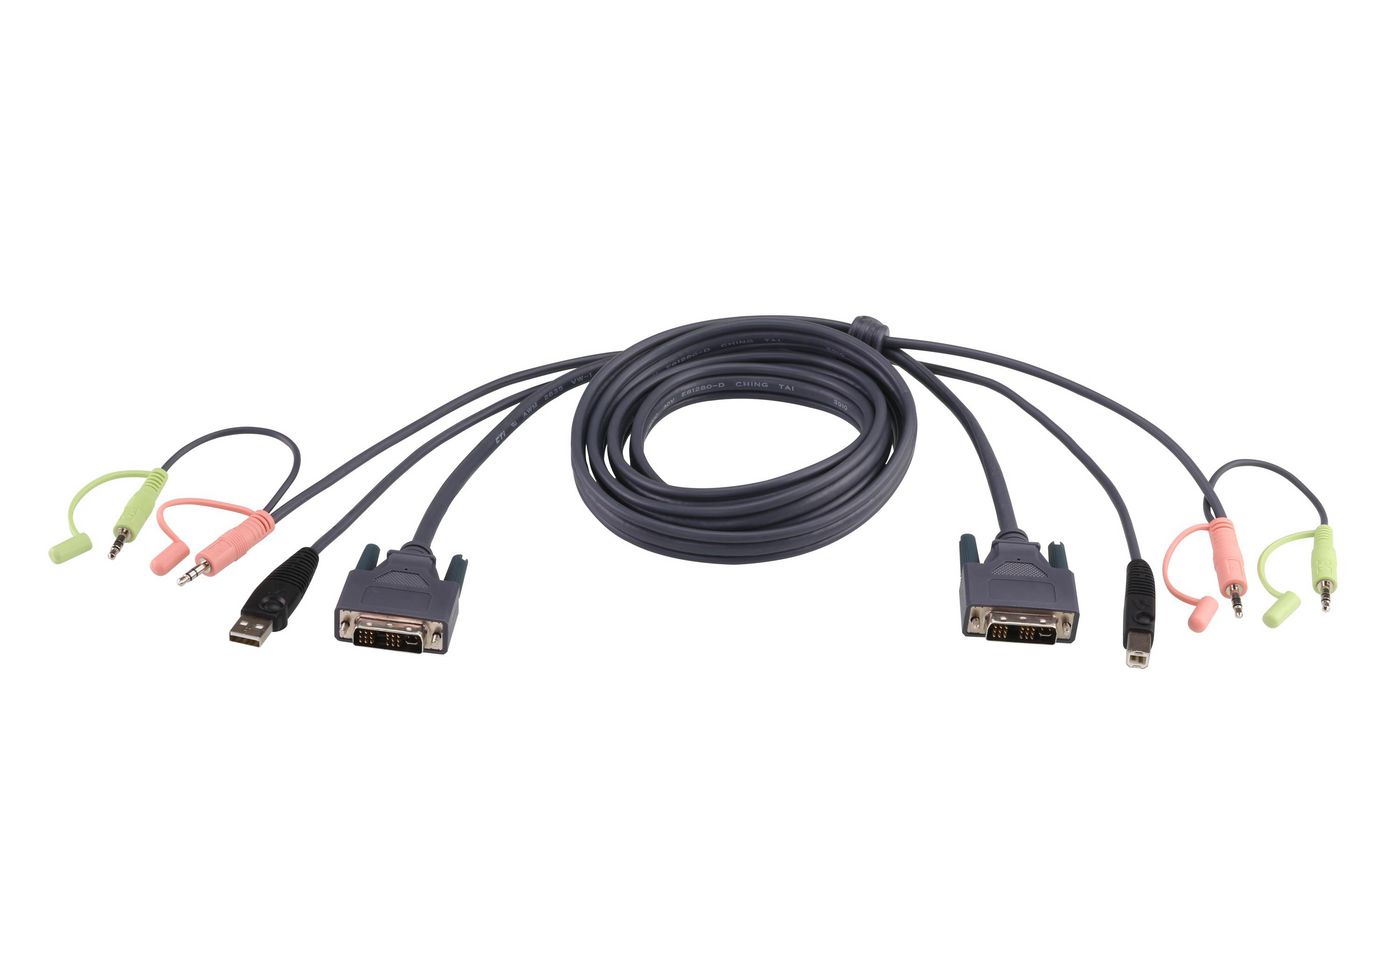 Aten 2L-7D05UD DVID Dual Link Cable 5m 